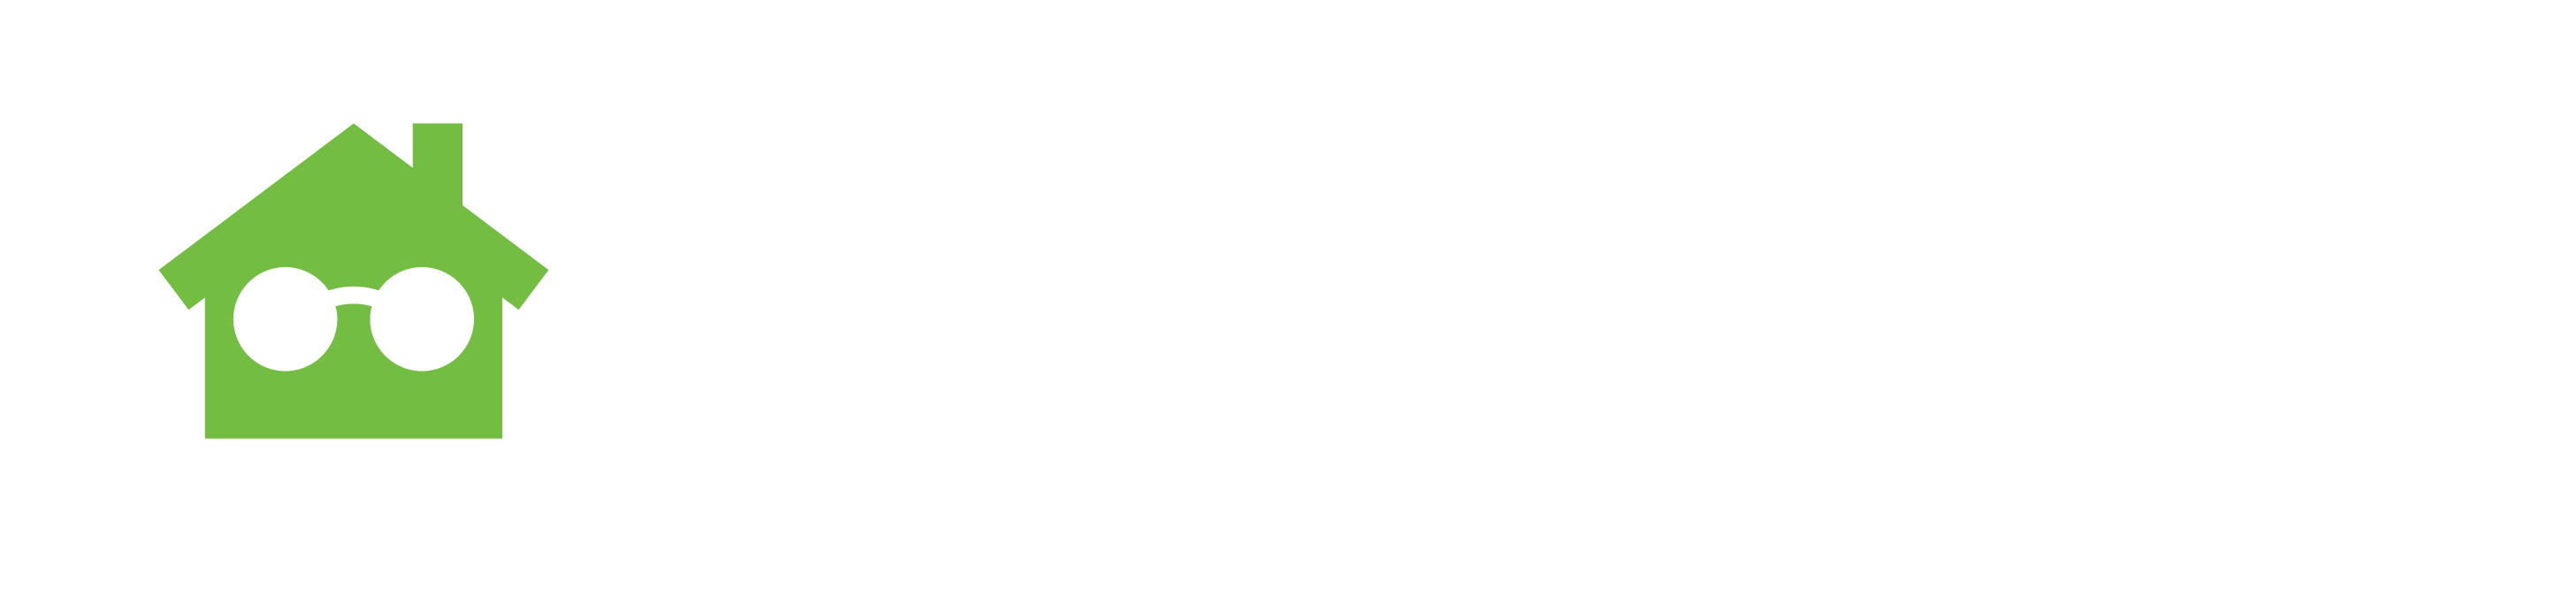 GeekEstate Blog Logo Reversed